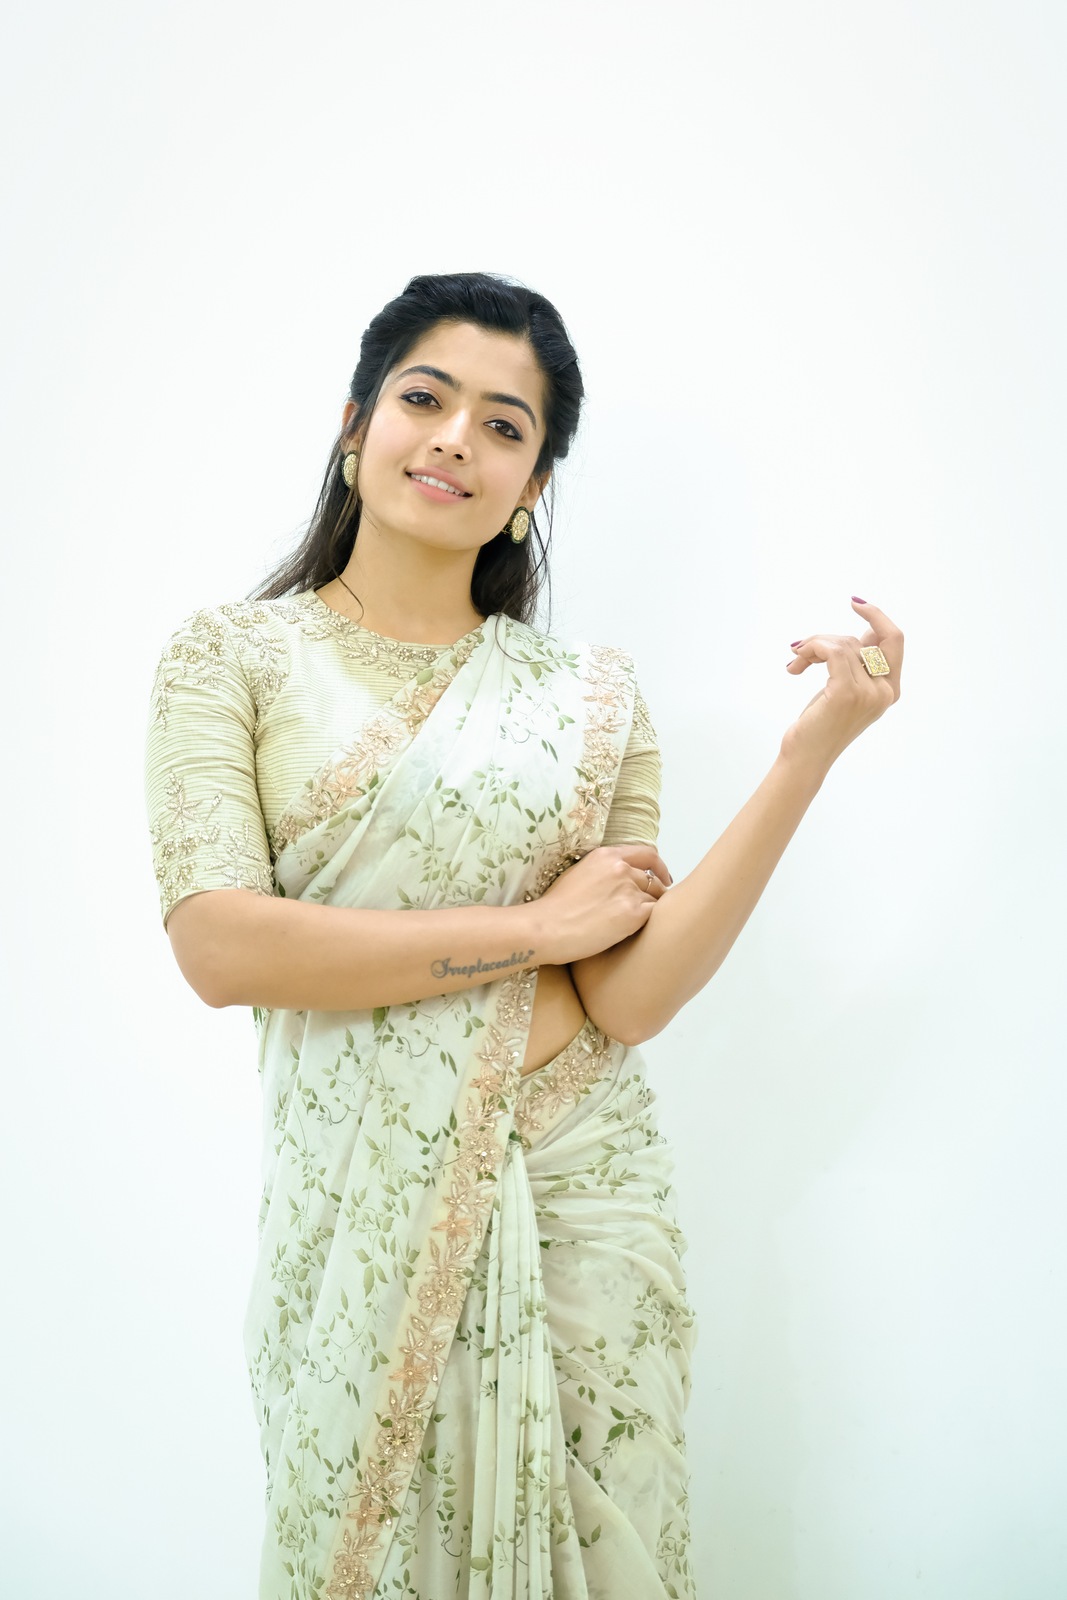 Rashmika Mandanna`s saree elegance